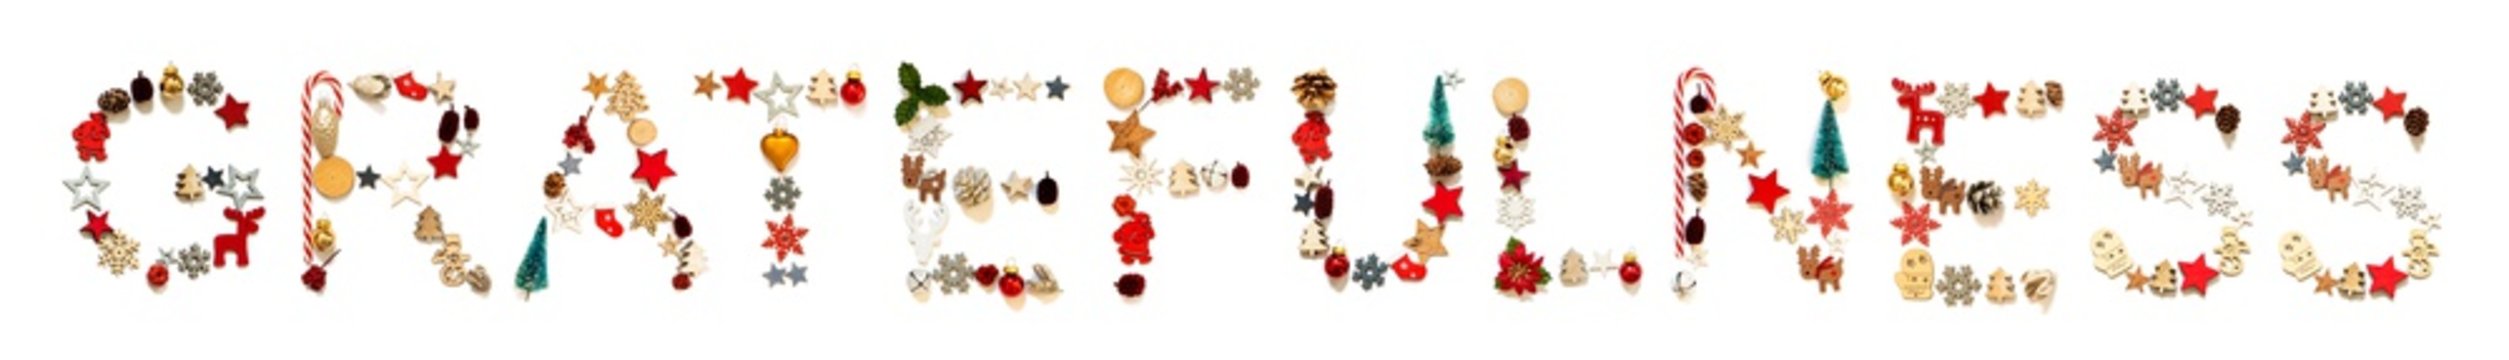 Colorful Christmas Decoration Letter Building Word Gratefulness